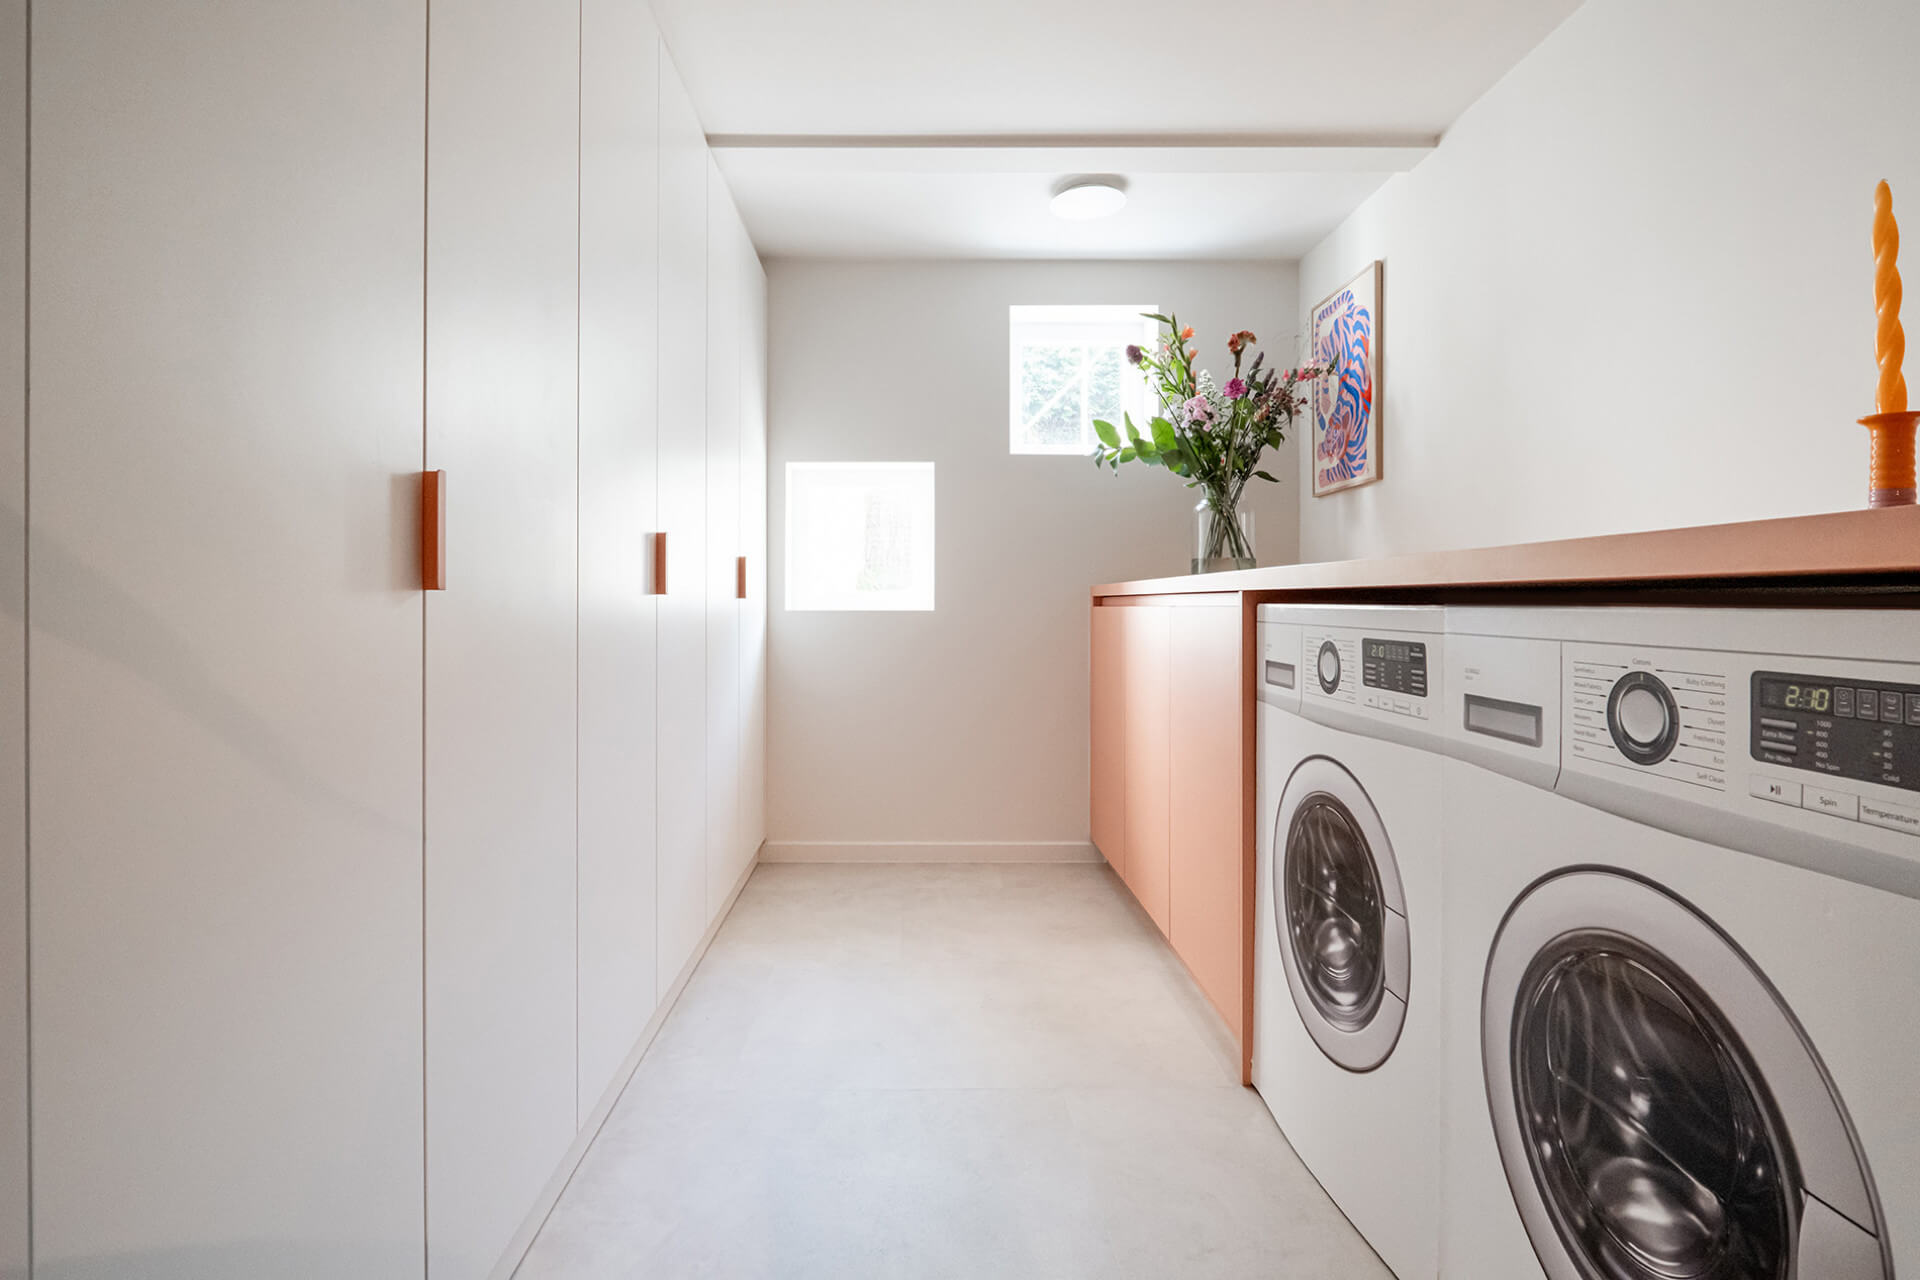 Custom white storage cabinet in a laundry room from Maatkasten Online.